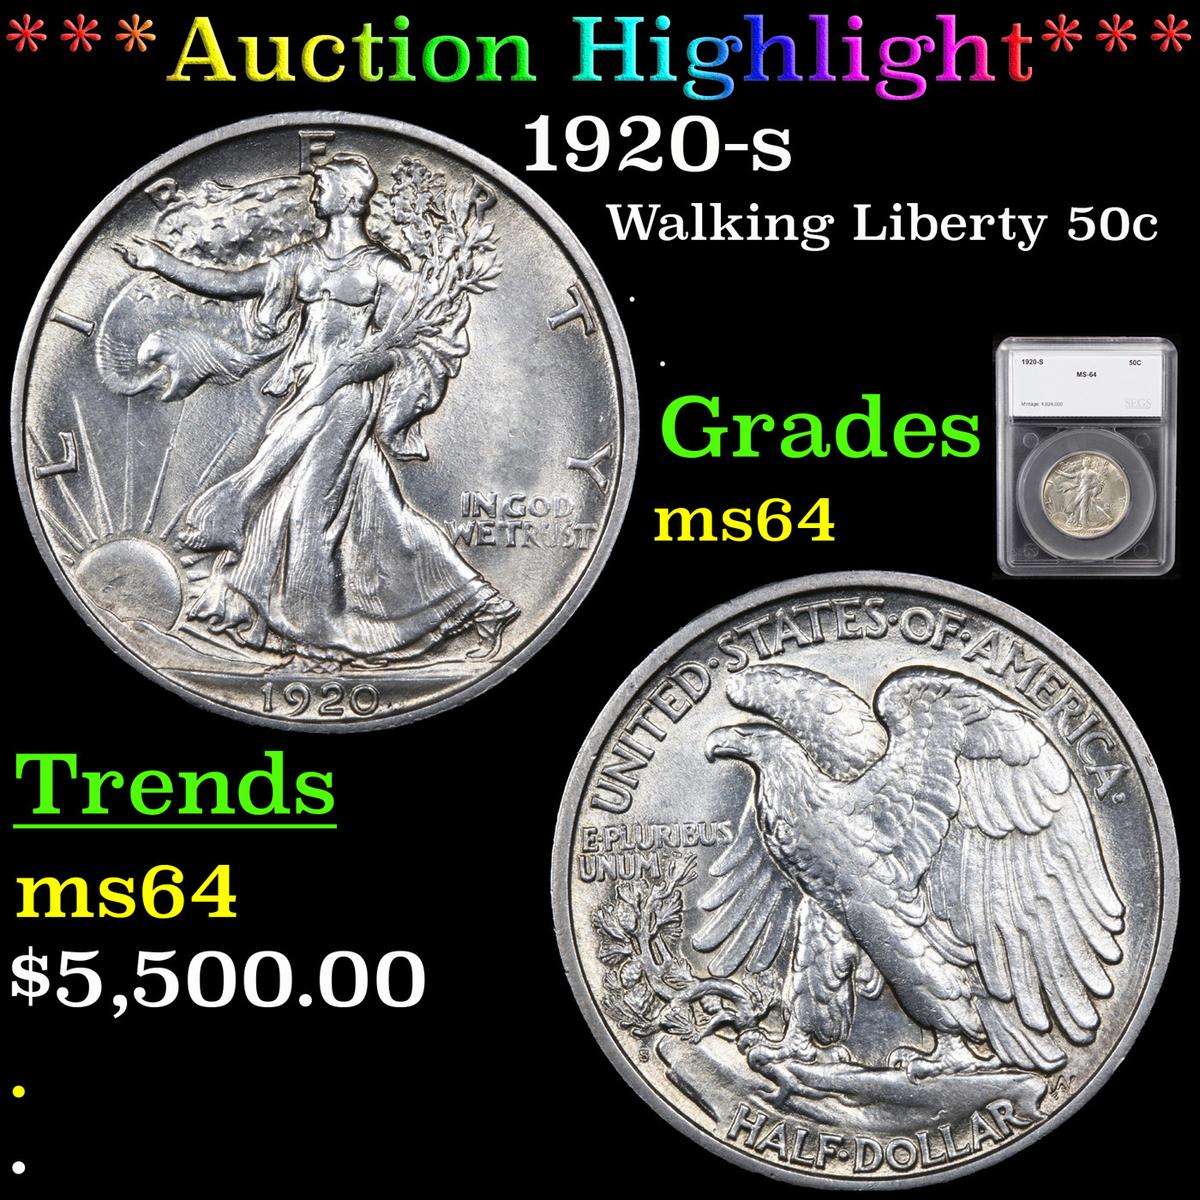 ***Auction Highlight*** 1920-s Walking Liberty Half Dollar 50c Graded ms64 By SEGS (fc)